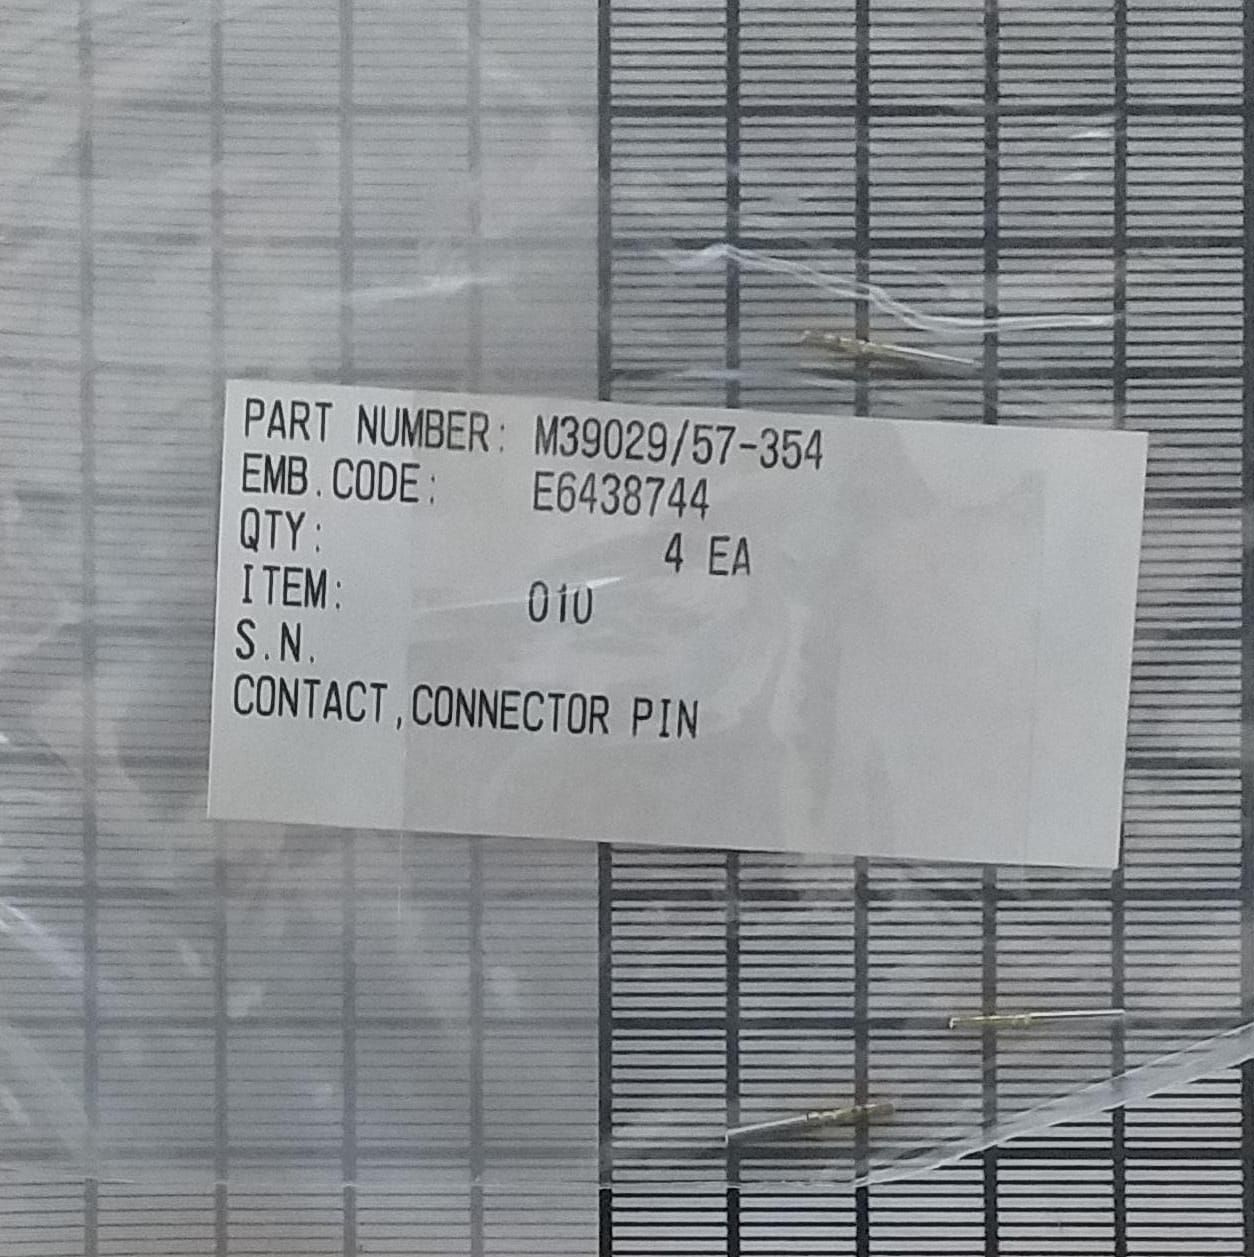 PINO CONECTOR - M39029/32-259 - Fibraer